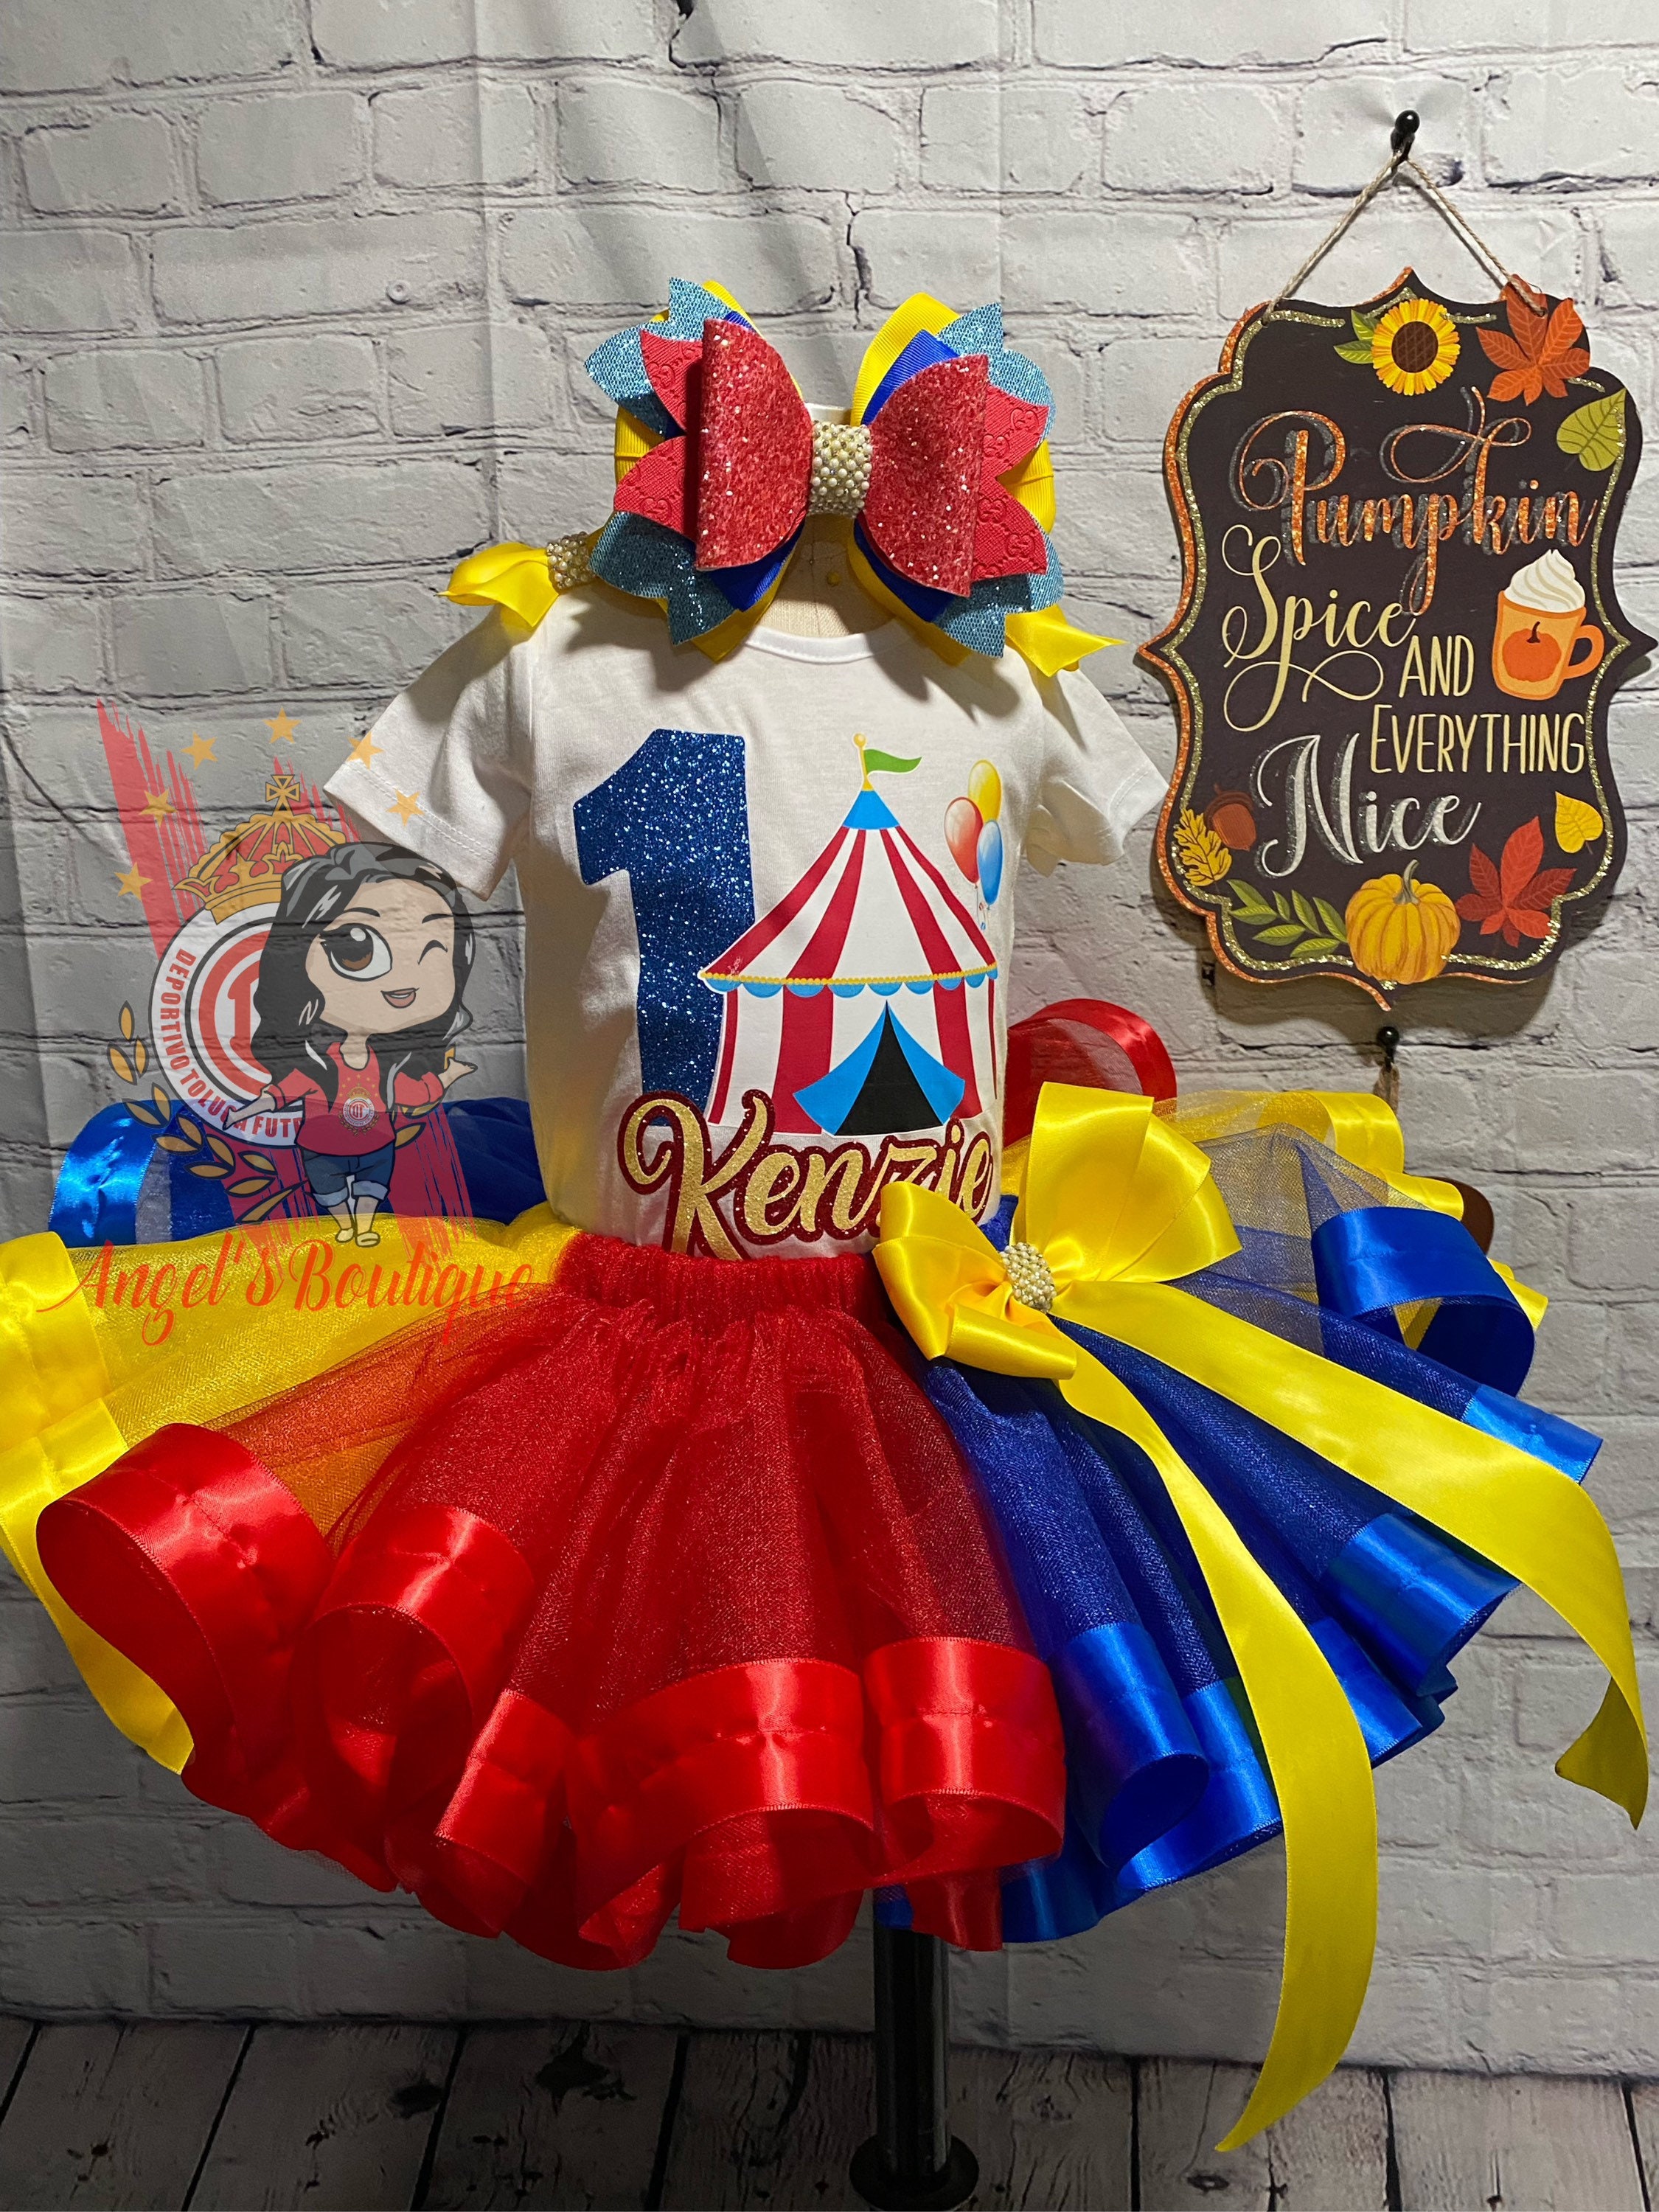 Womens Clown Costumes & Fancy Dress - Carnival Store GmbH